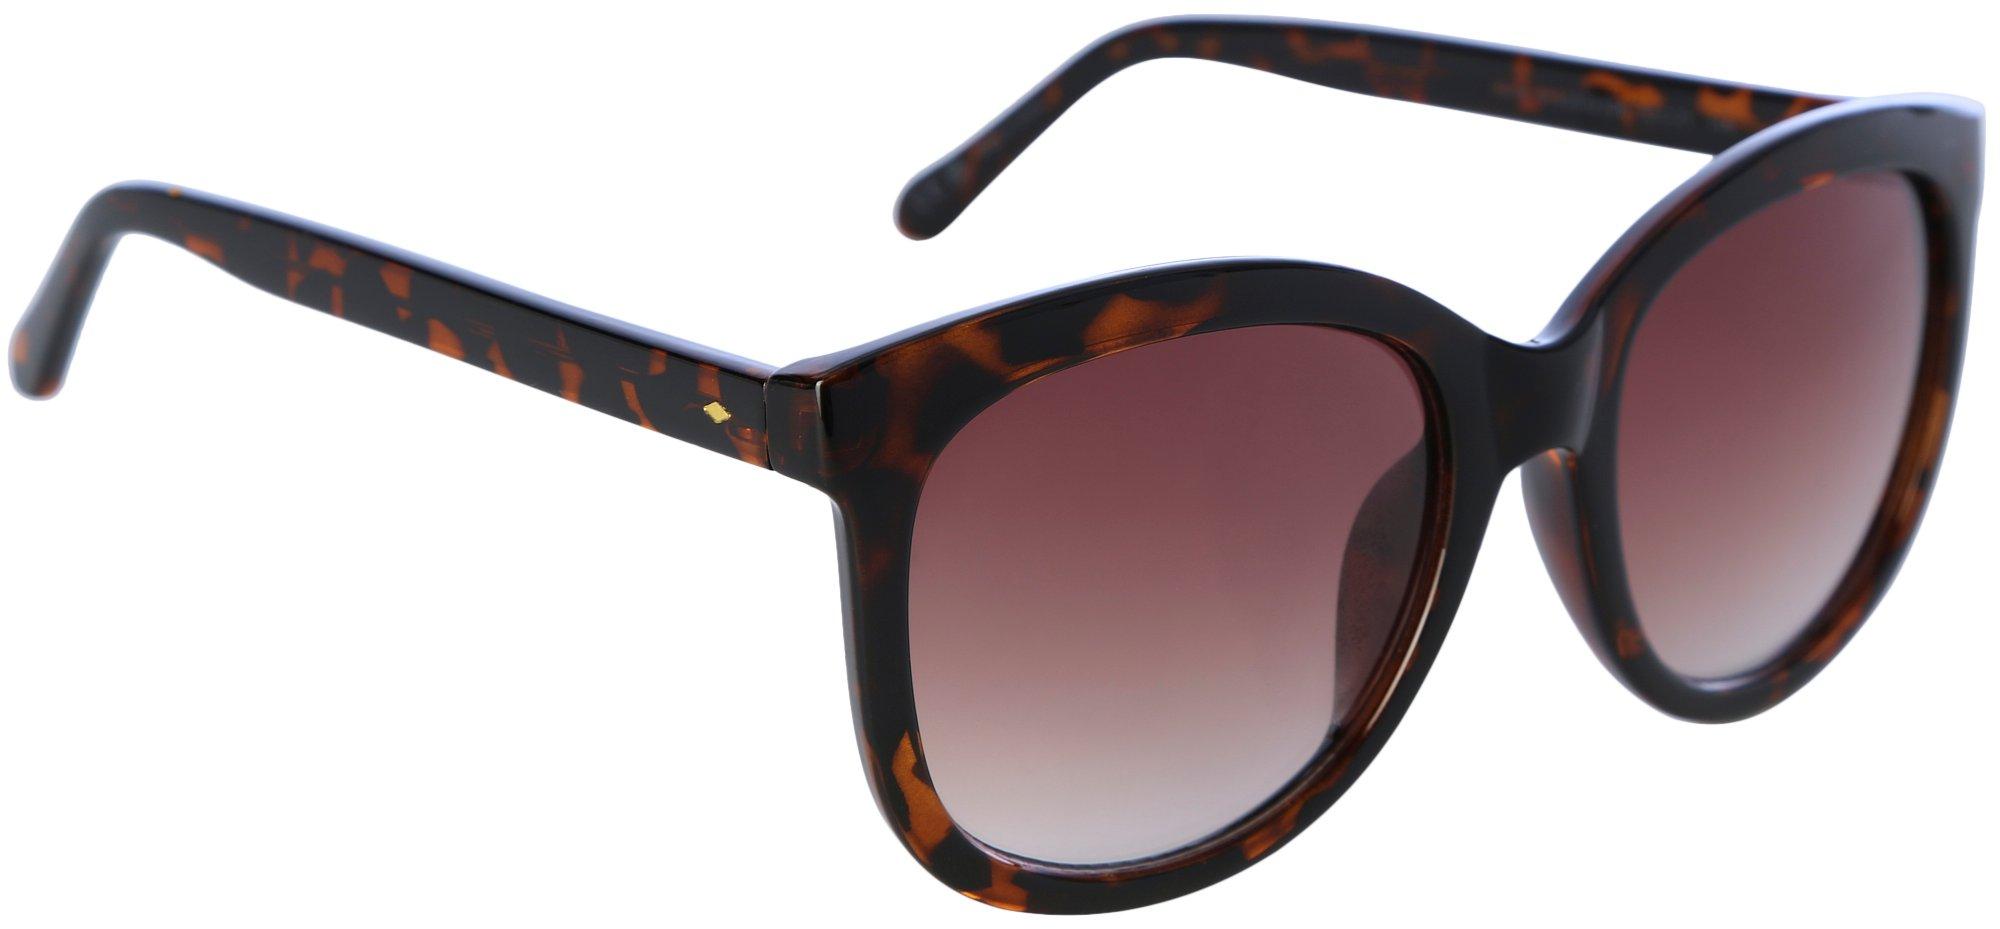 Womens Tortoiseshell Square Tinted Sunglasses